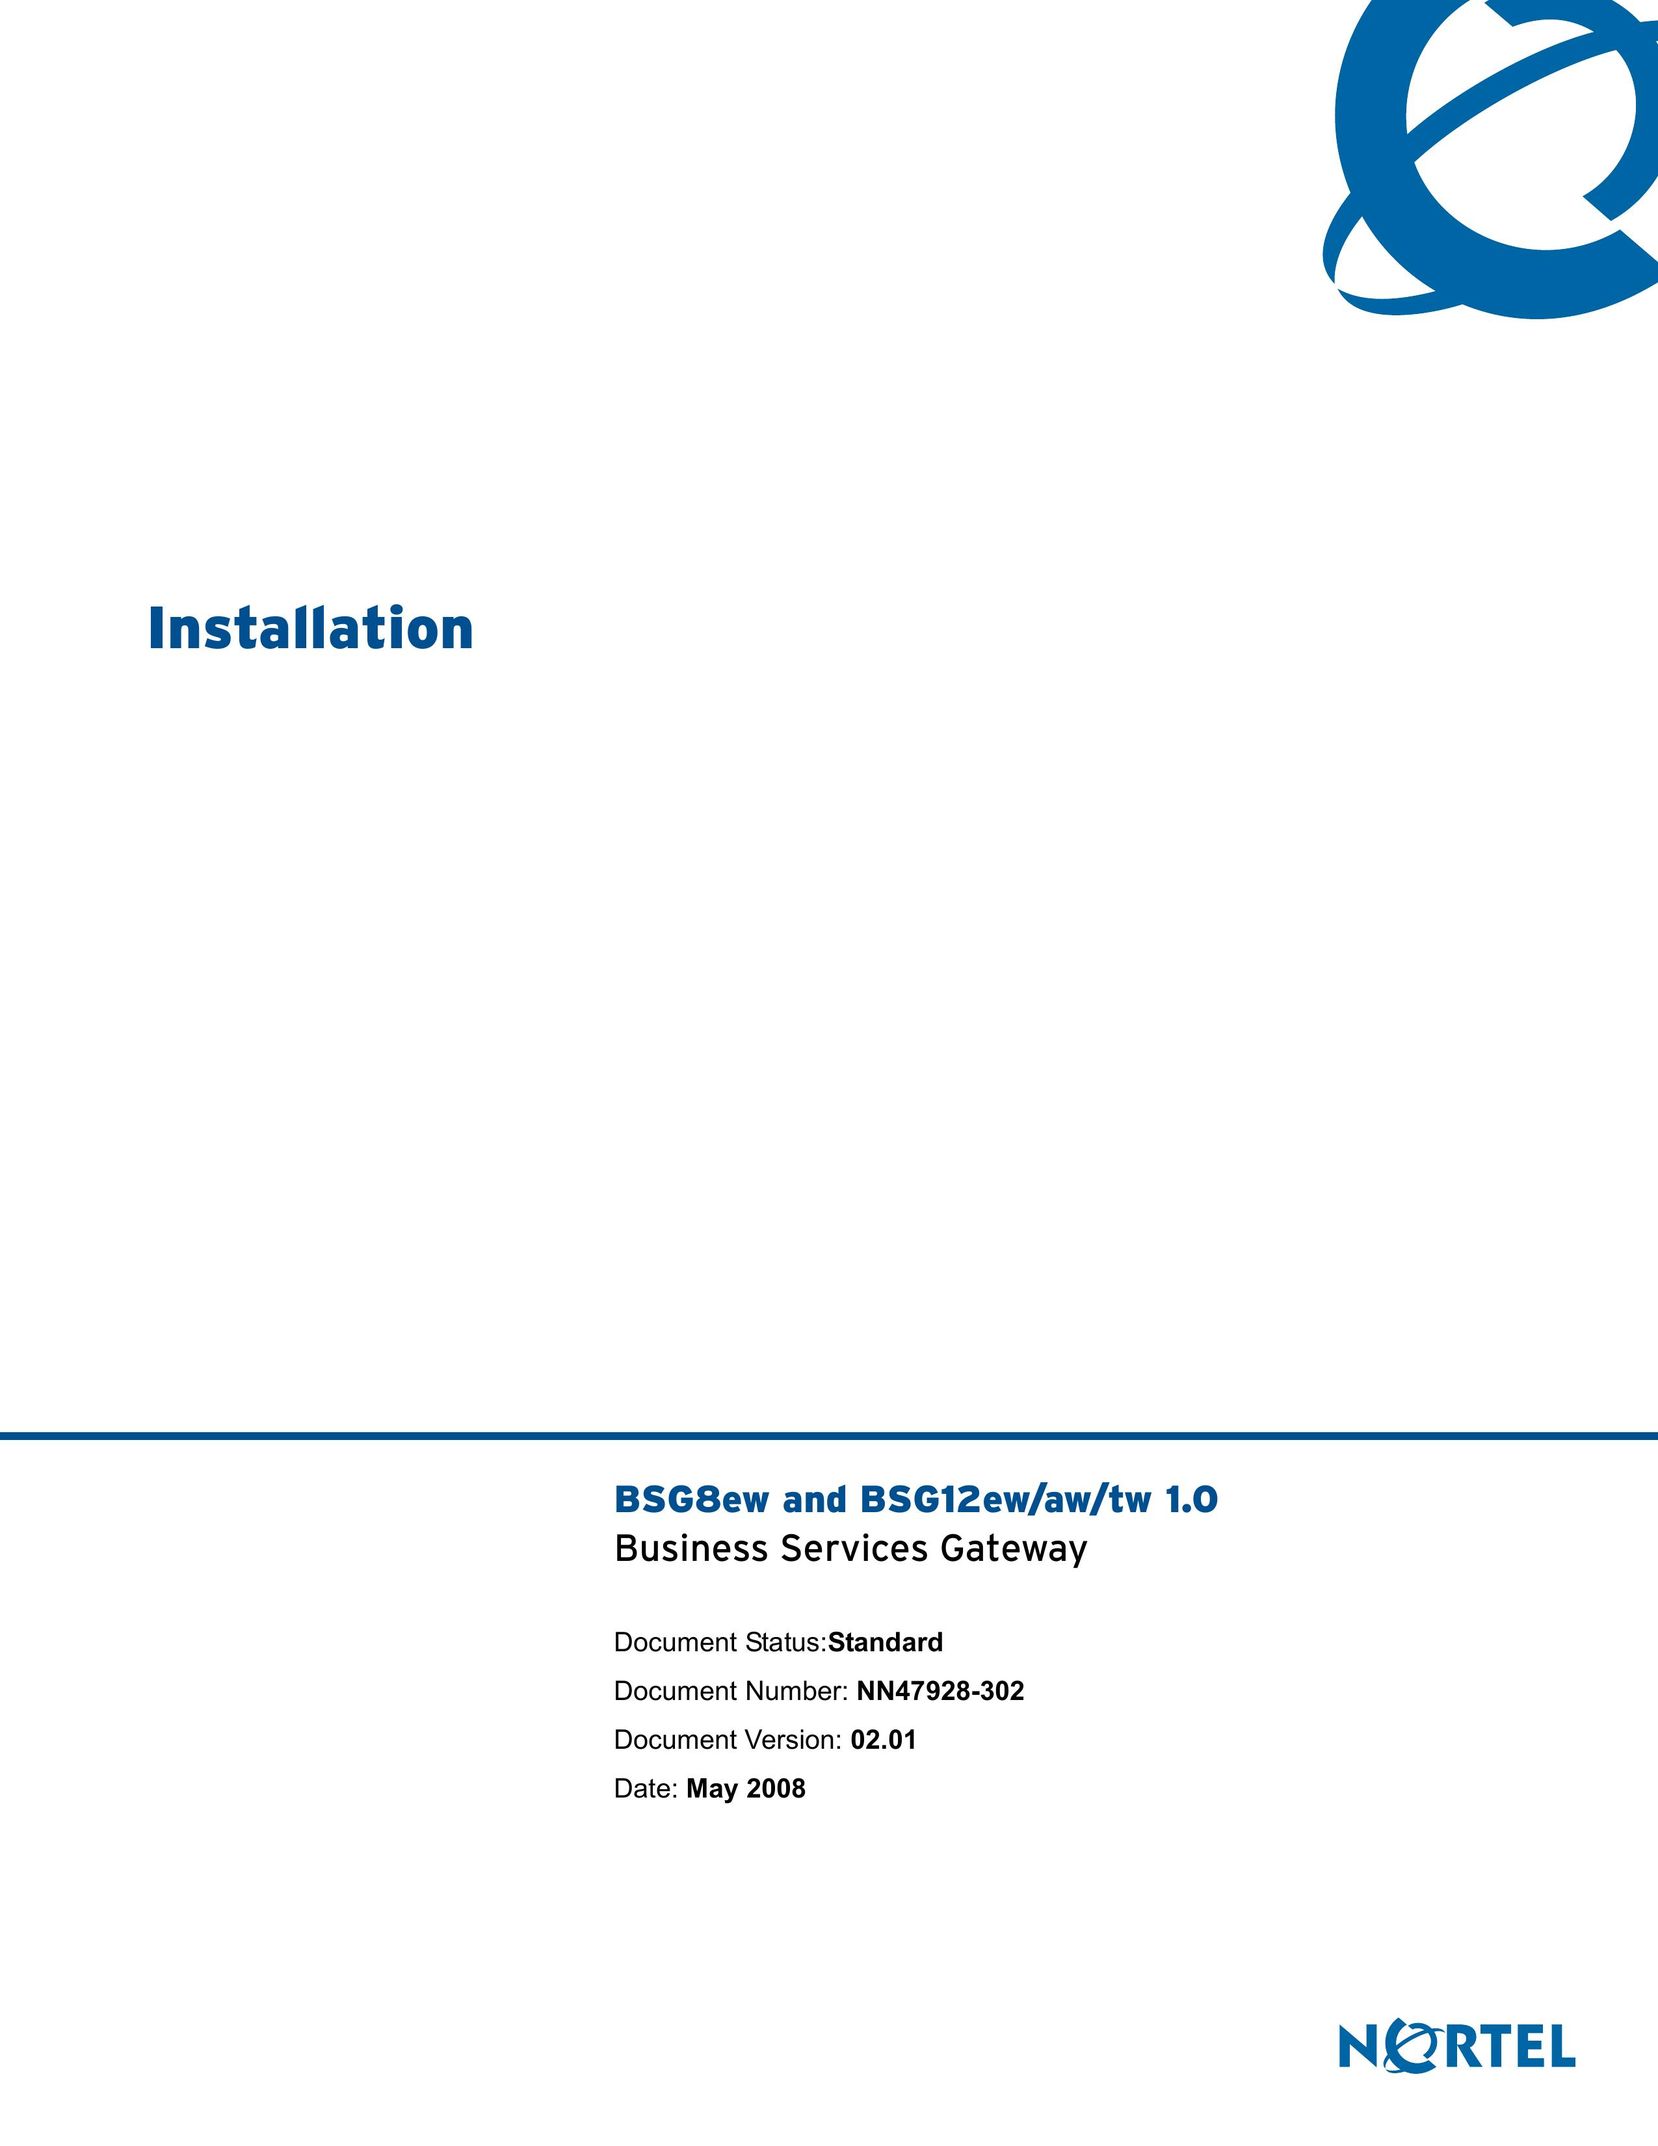 Nortel Networks BSG8ew Network Router User Manual